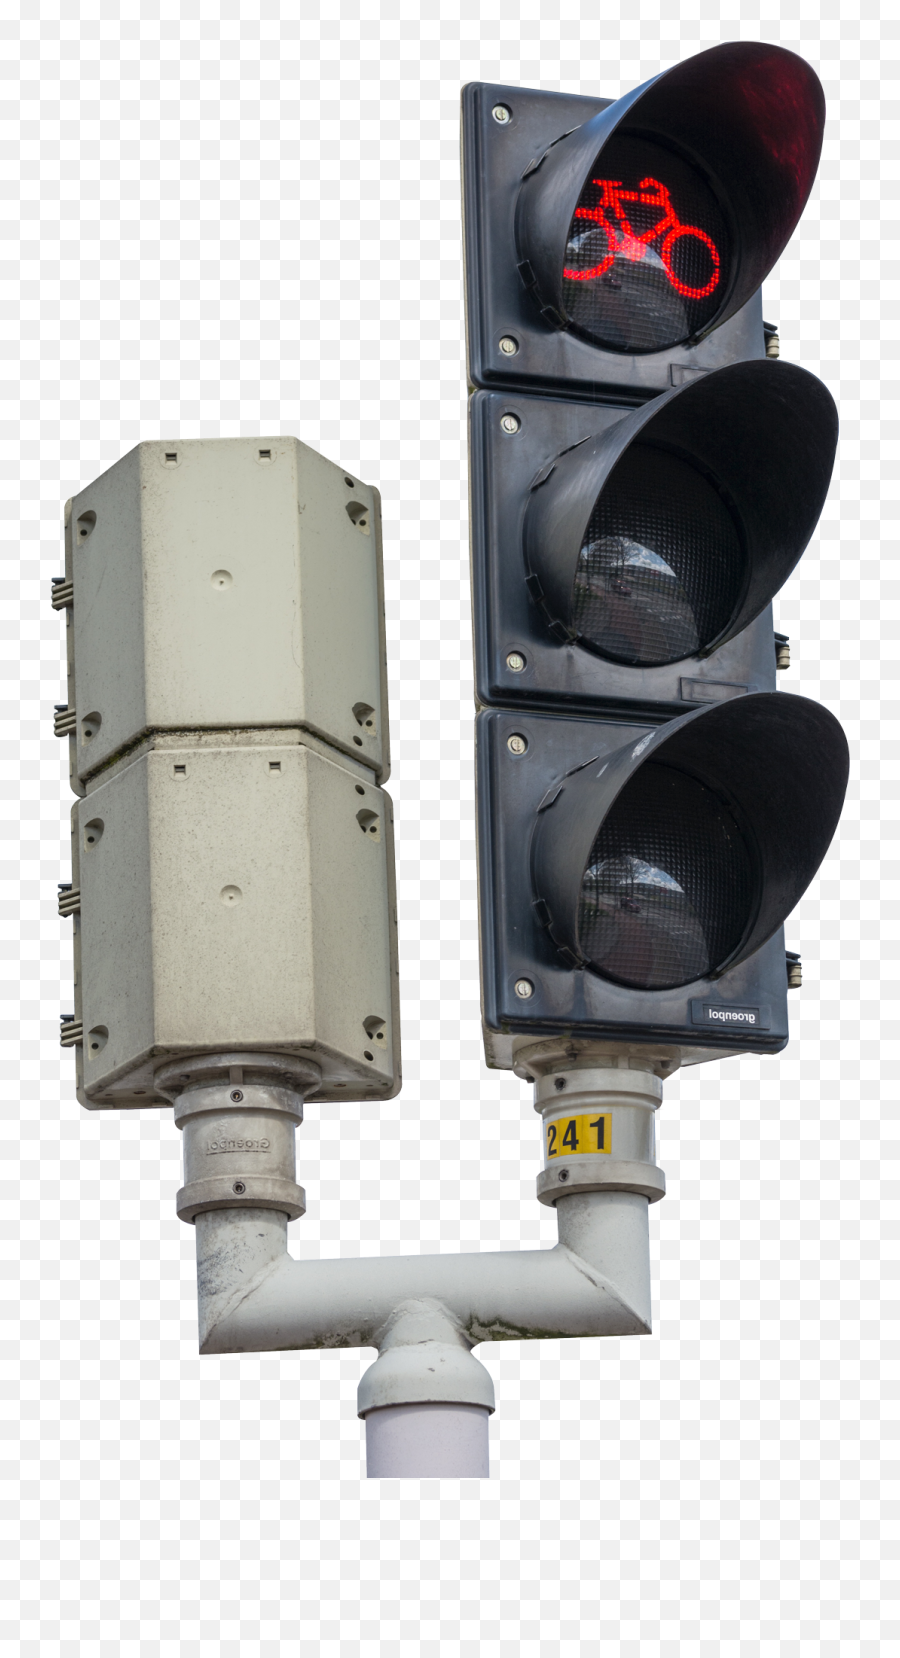 Traffic Png Images - Pngpix Traffic Light,Traffic Png